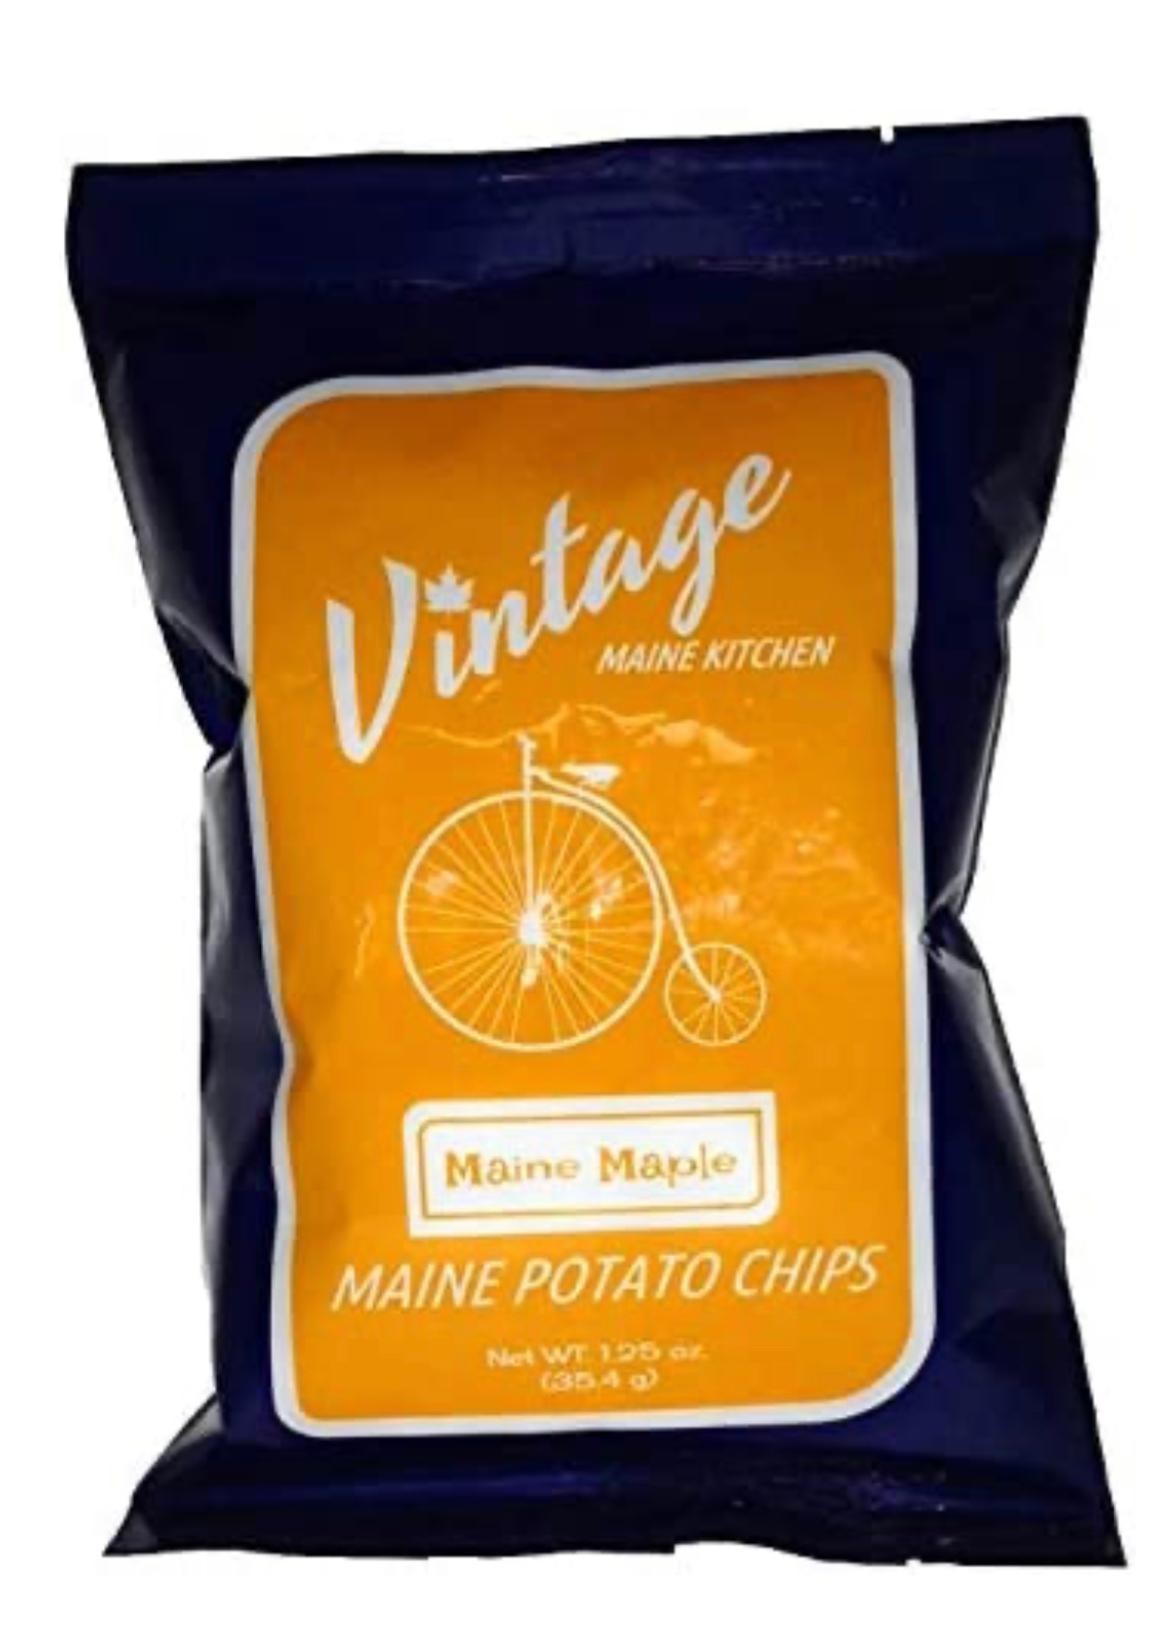 Vintage Maine Kitchen Maine Maple Potato Chips 1.25 oz